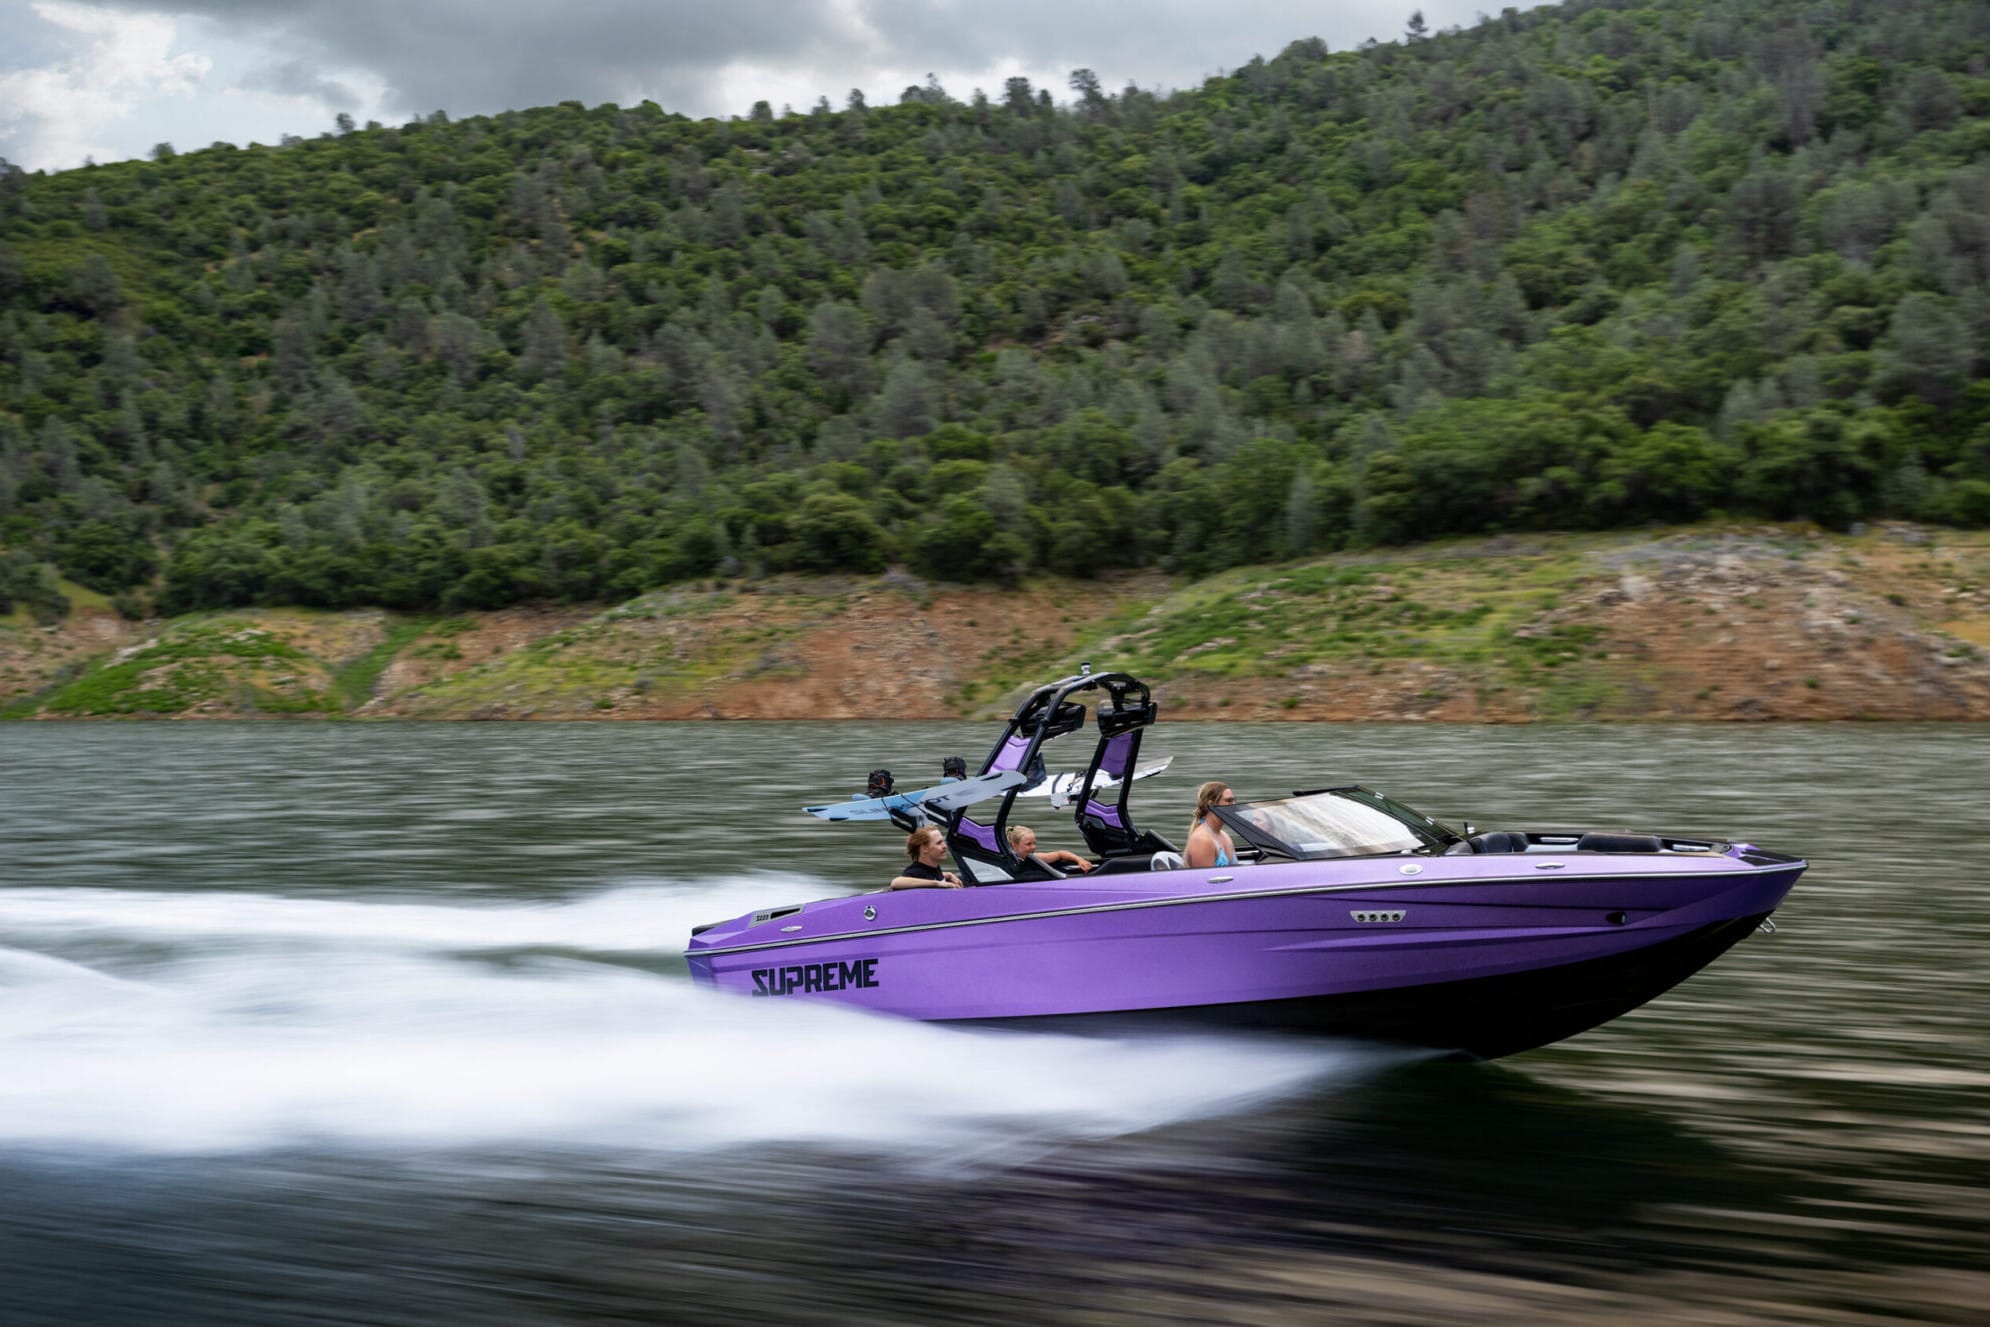 Purple S220 Supreme boat cruising in water.